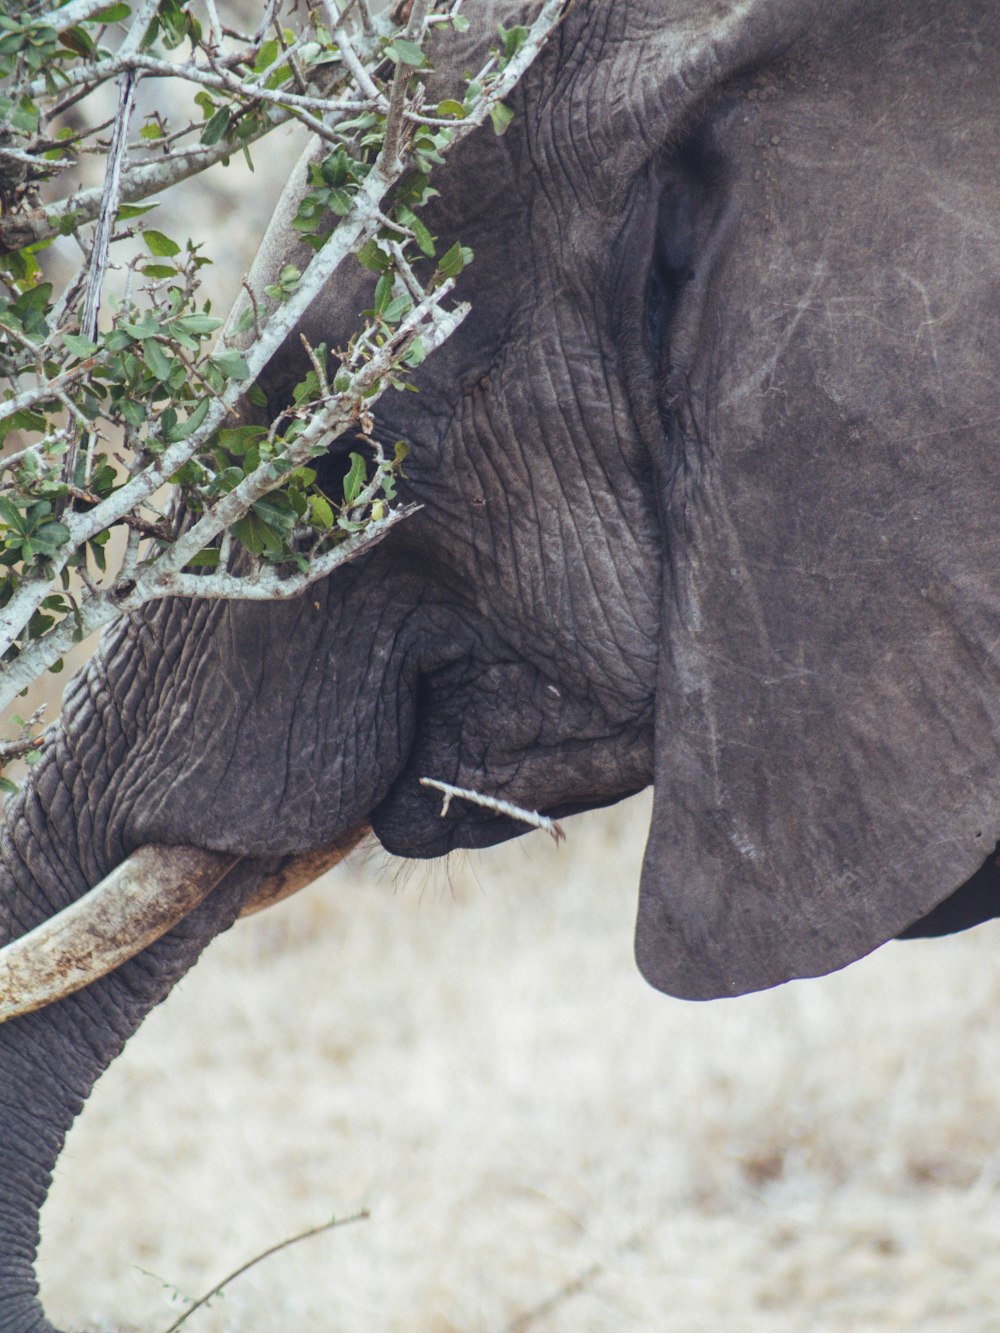 an elephant eating leaves